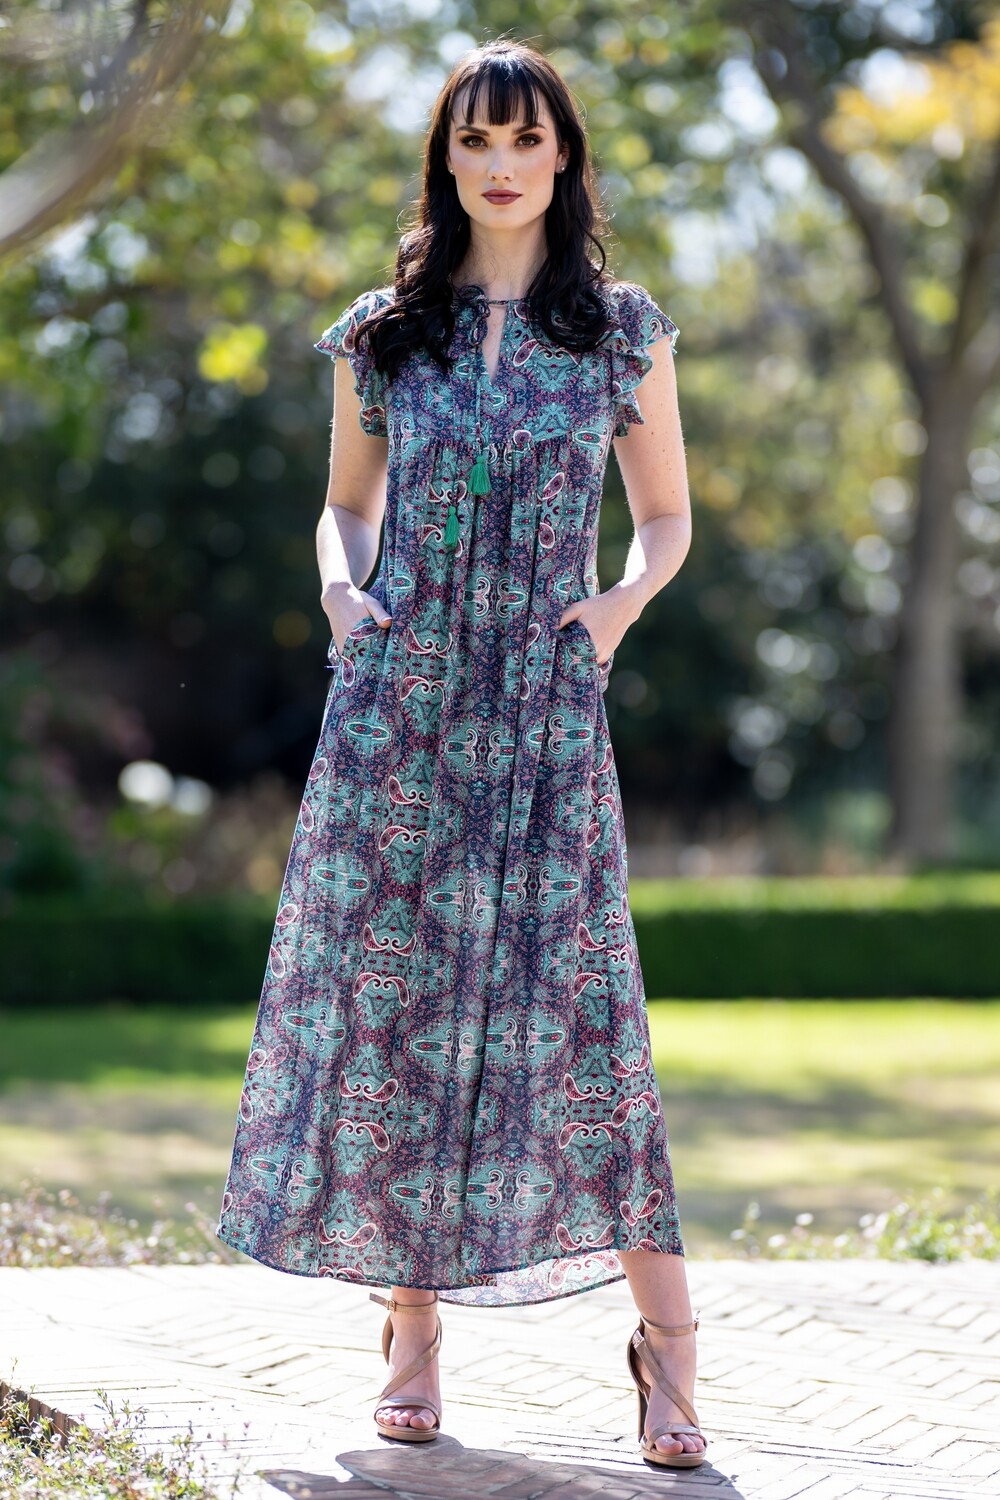 Mastik paisley Print style dress with frill cap sleeve detail